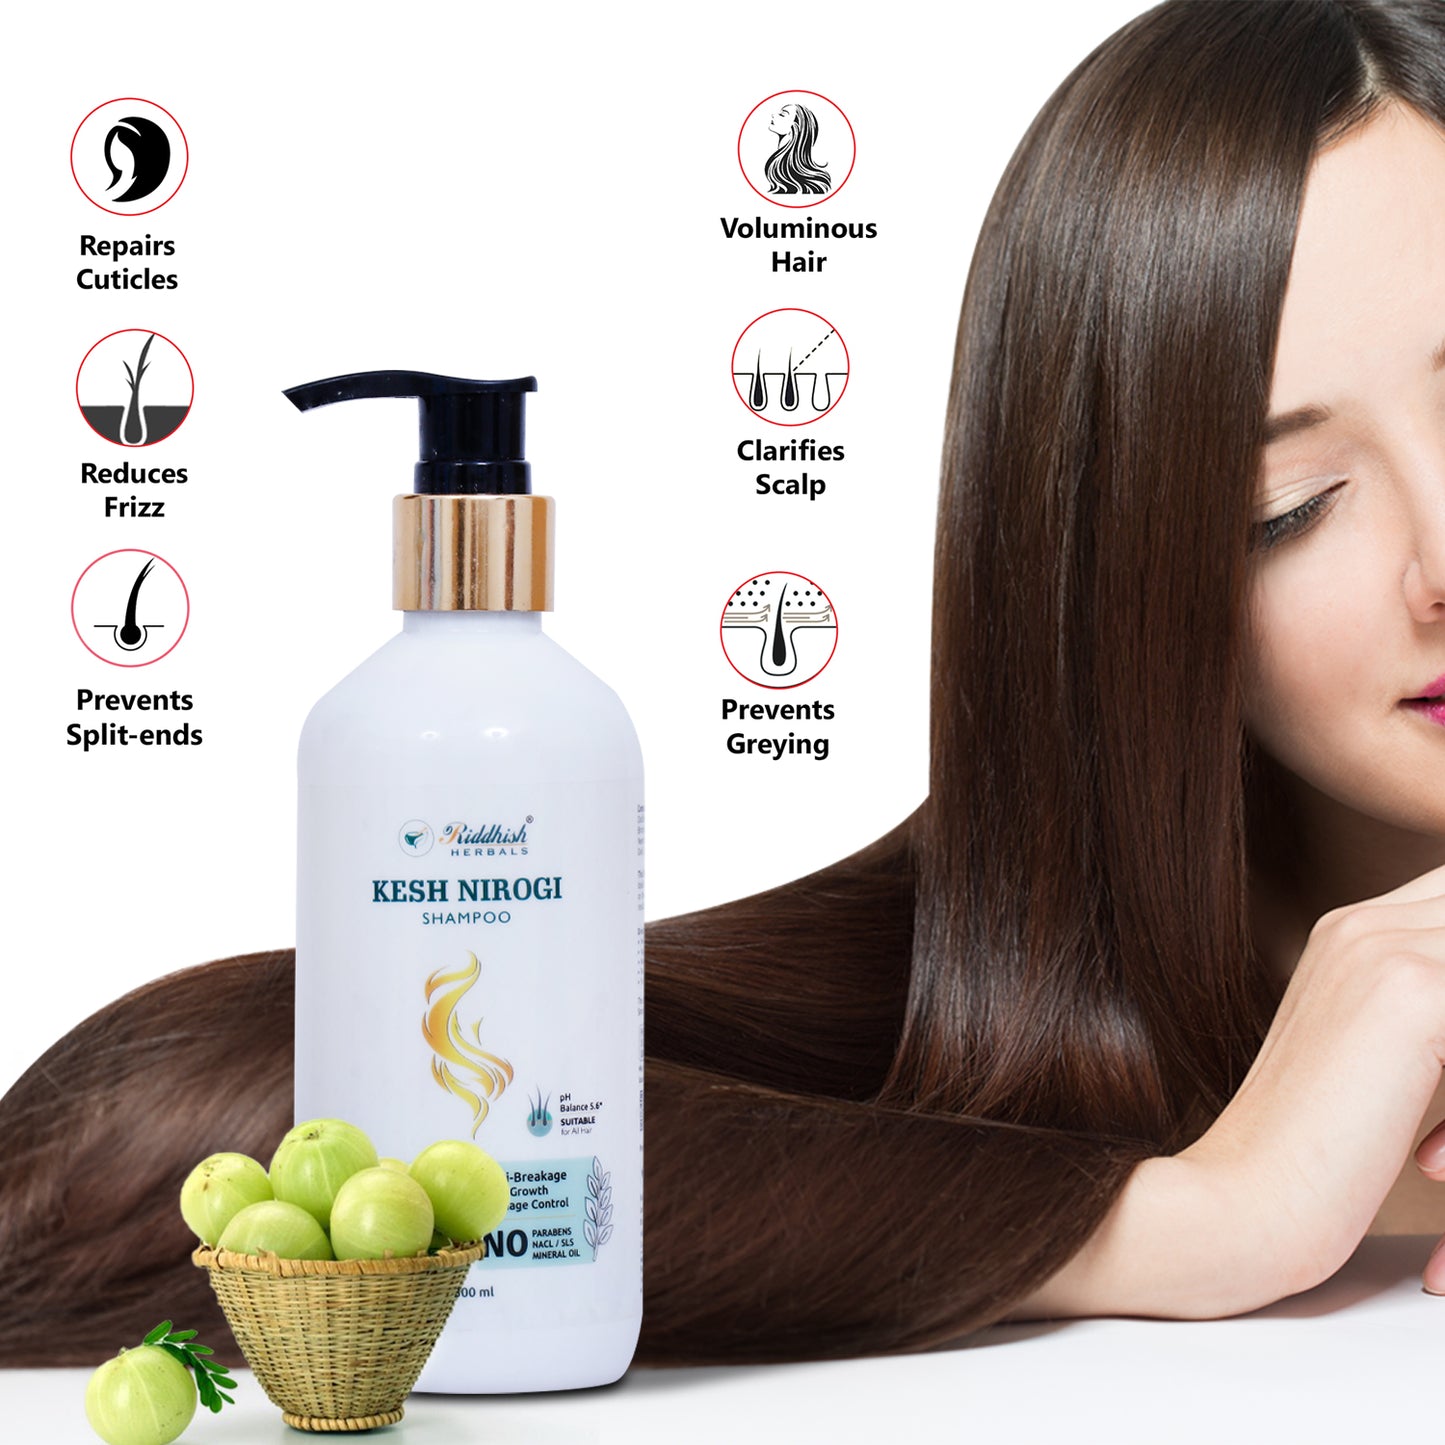 Kesh Nirogi Anti Hairfall Smooth and Silky Shampoo - Intense Moisturization for Shiny Hair